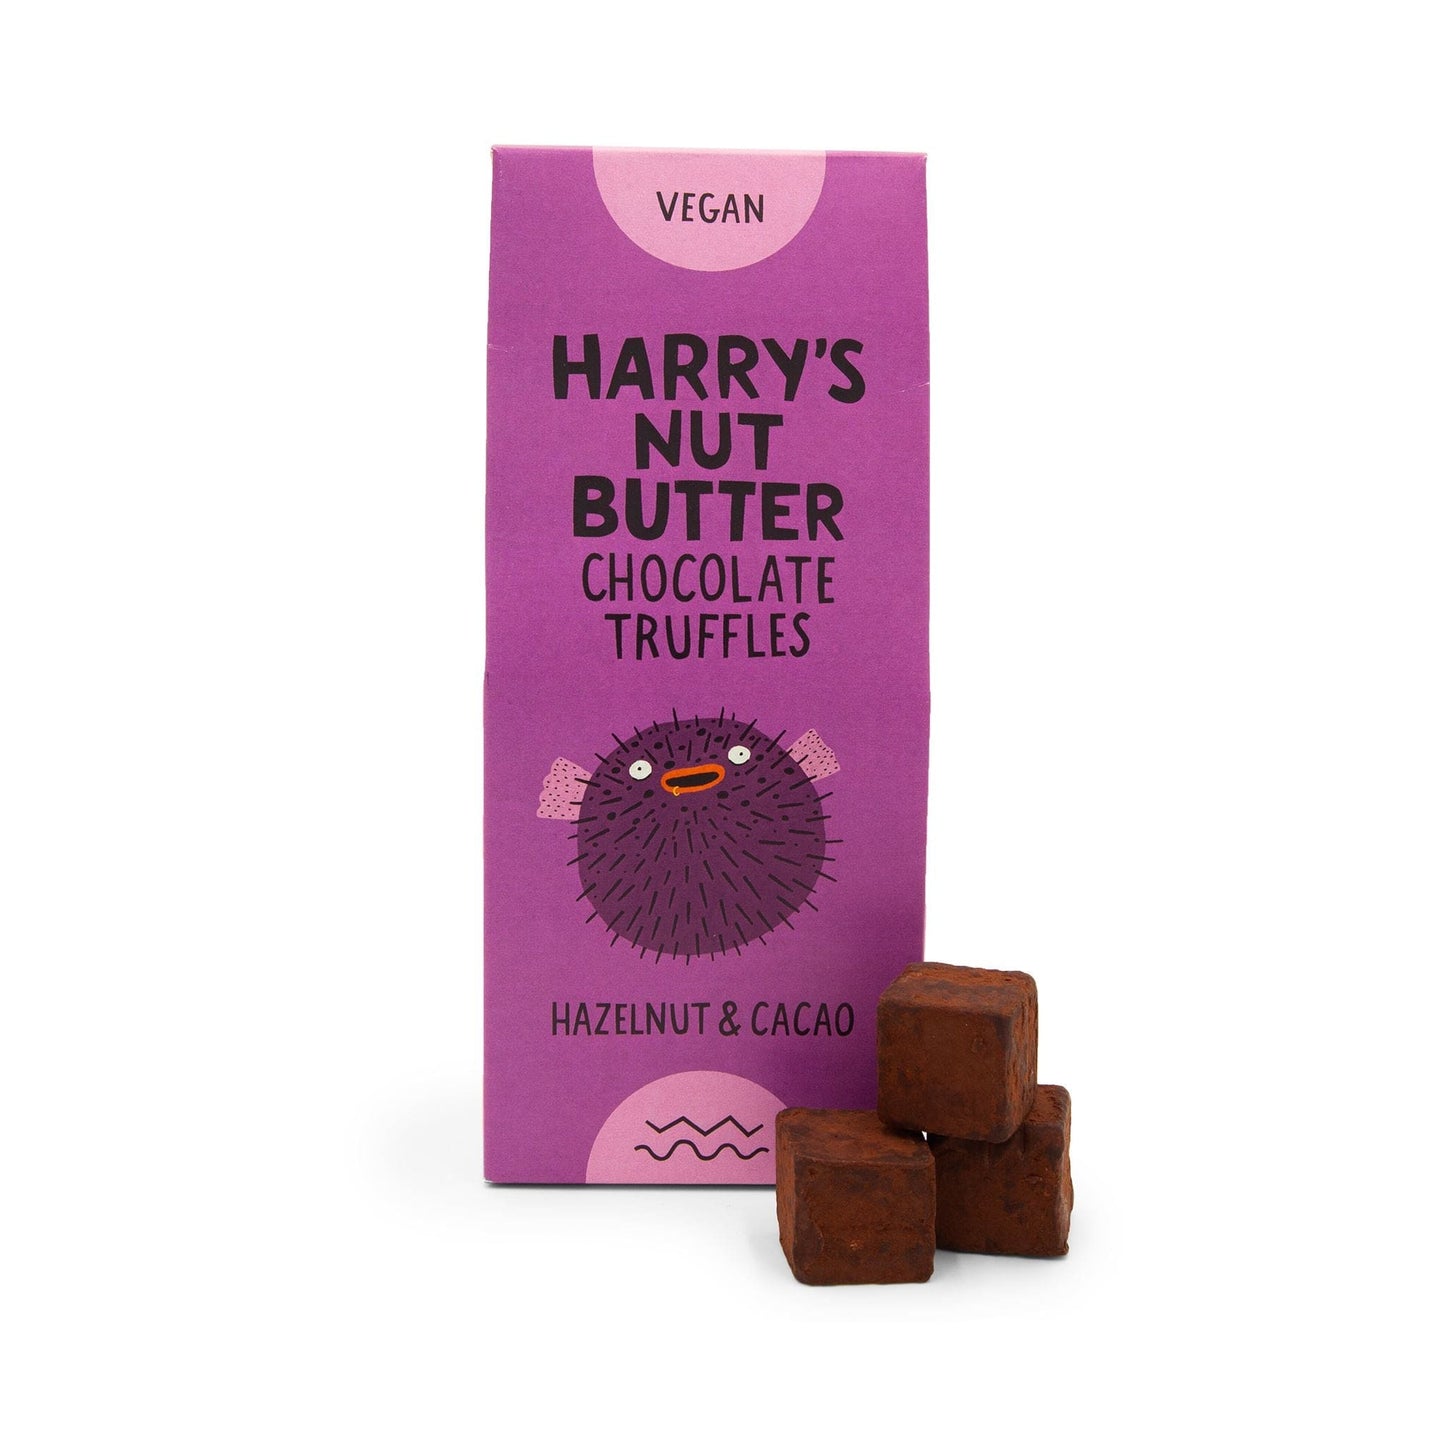 Harry's Nut Butter Chocolate Harry's Nut Butter Chocolate Truffles - Hazelnut & Cacao